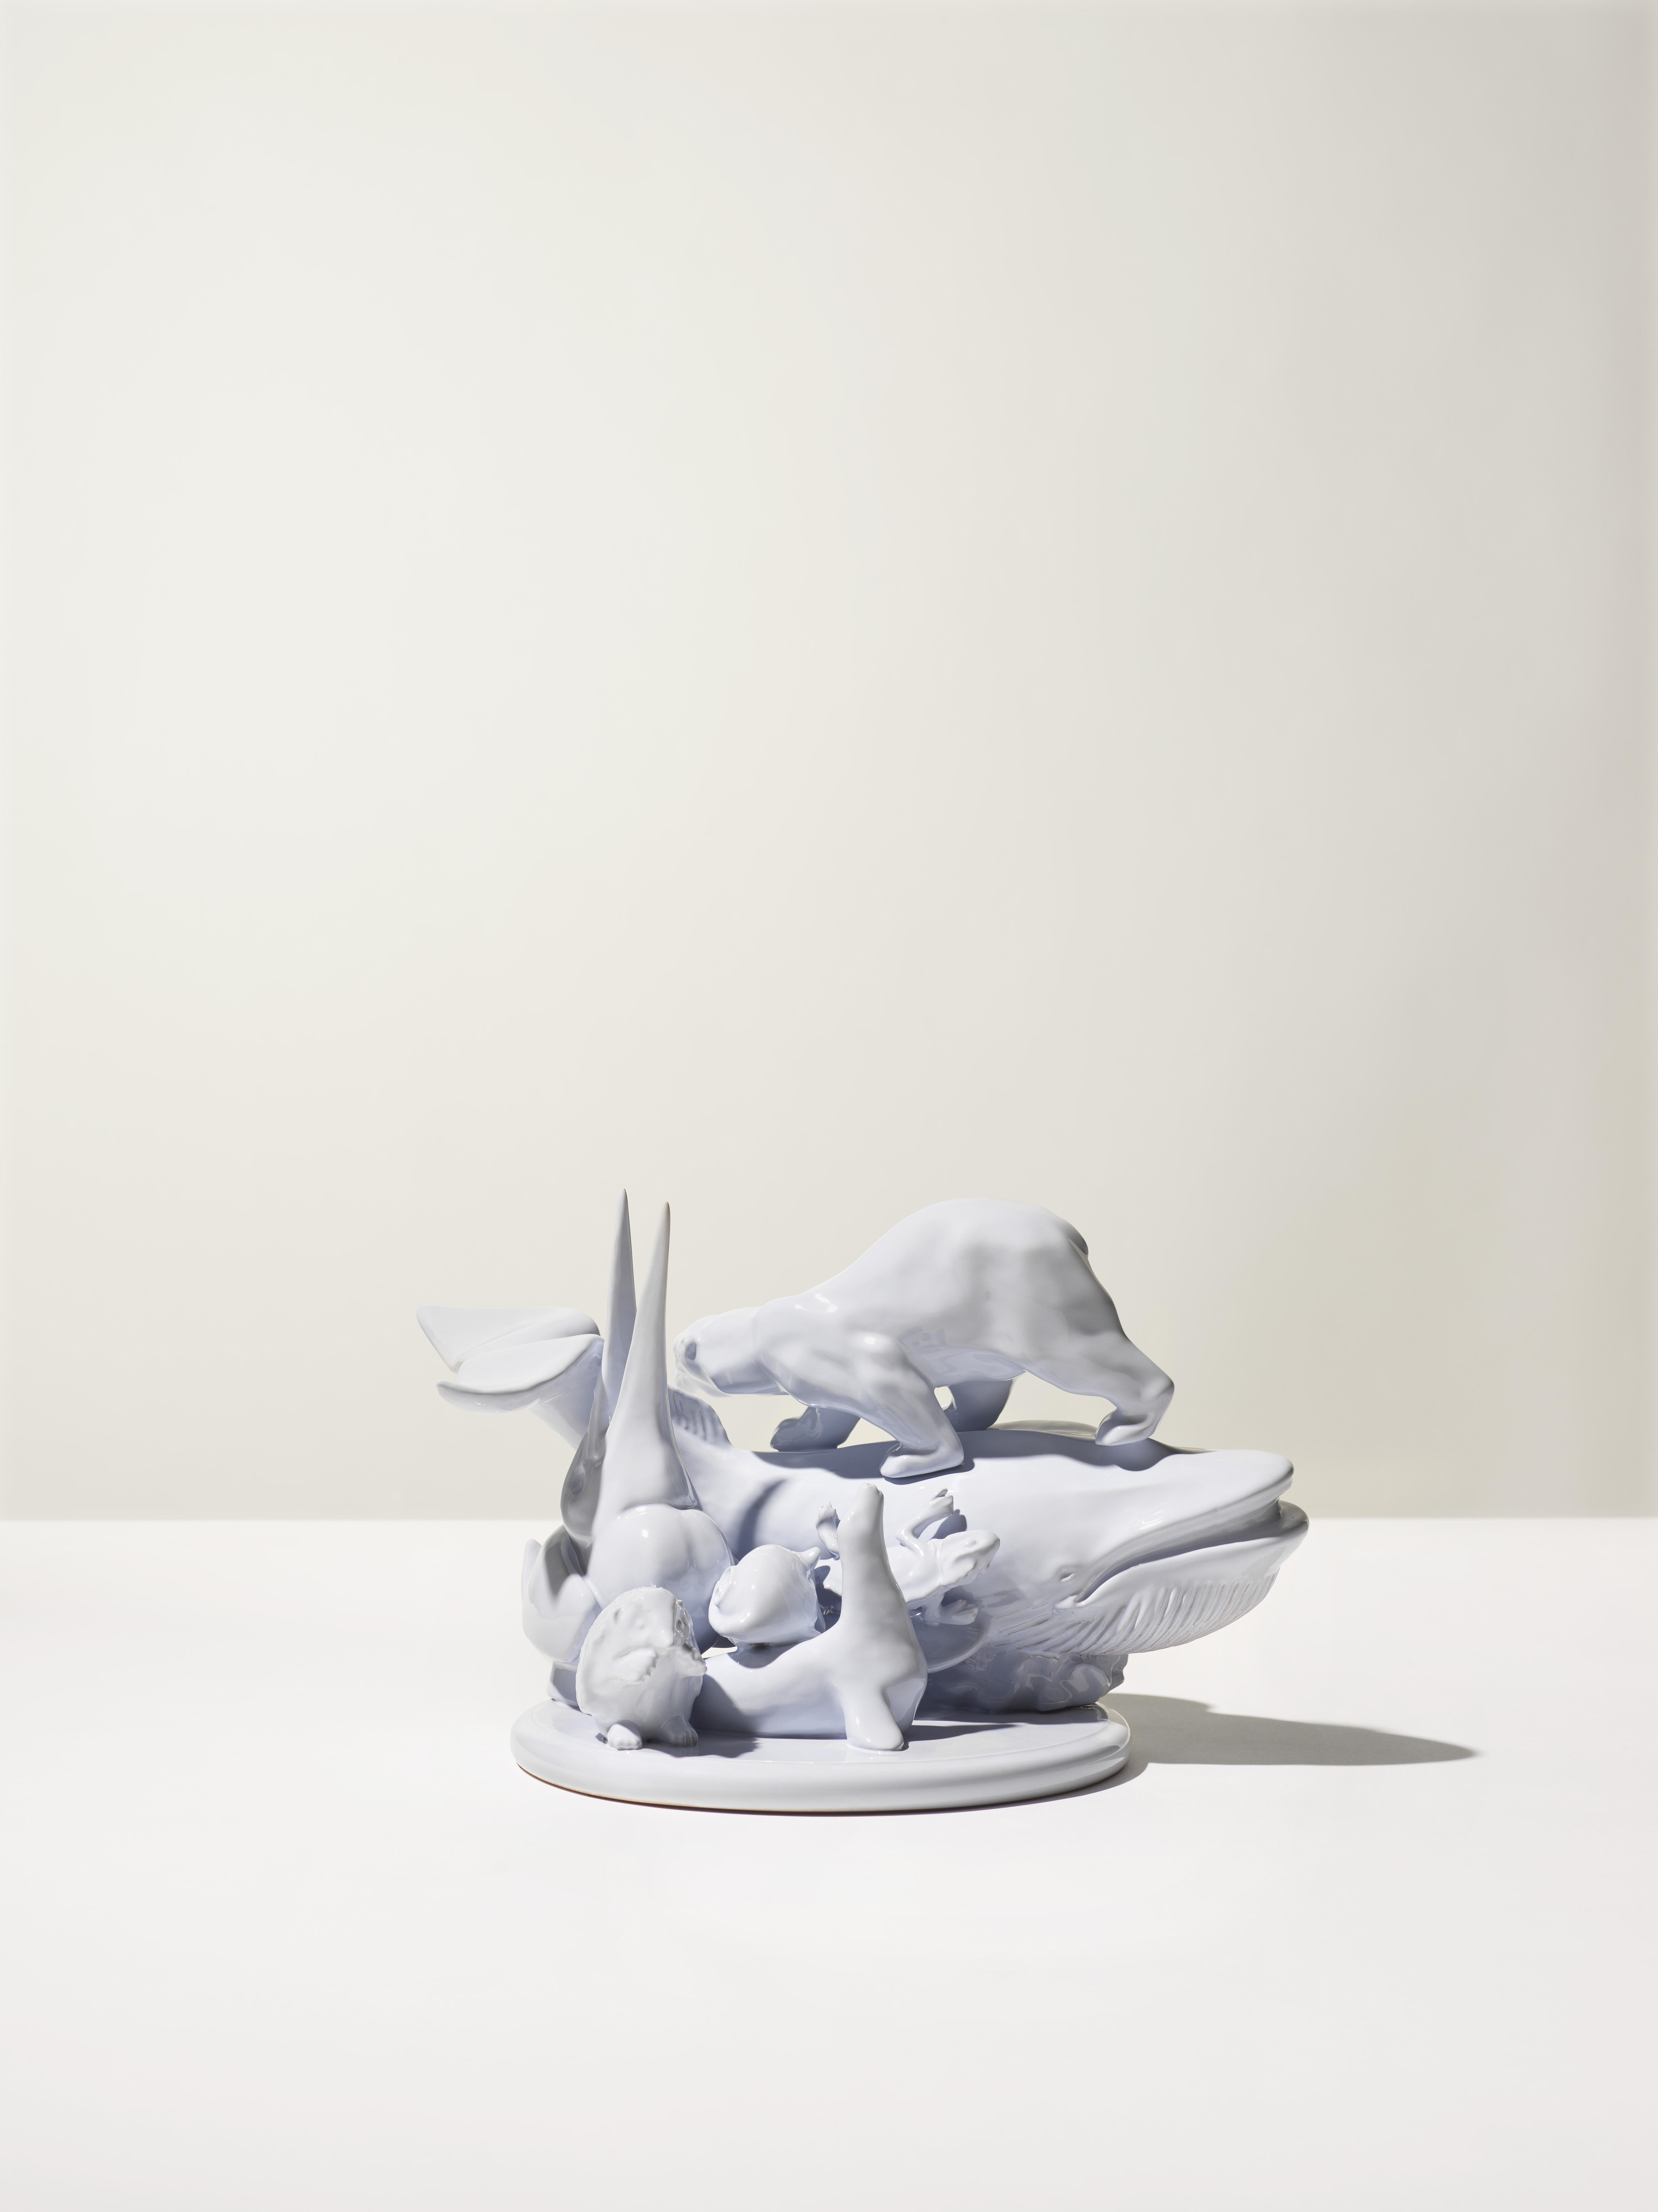 Moderne Sculpture bleu clair du 21e siècle de Ceramica Gatti, designer A. Anastasio en vente